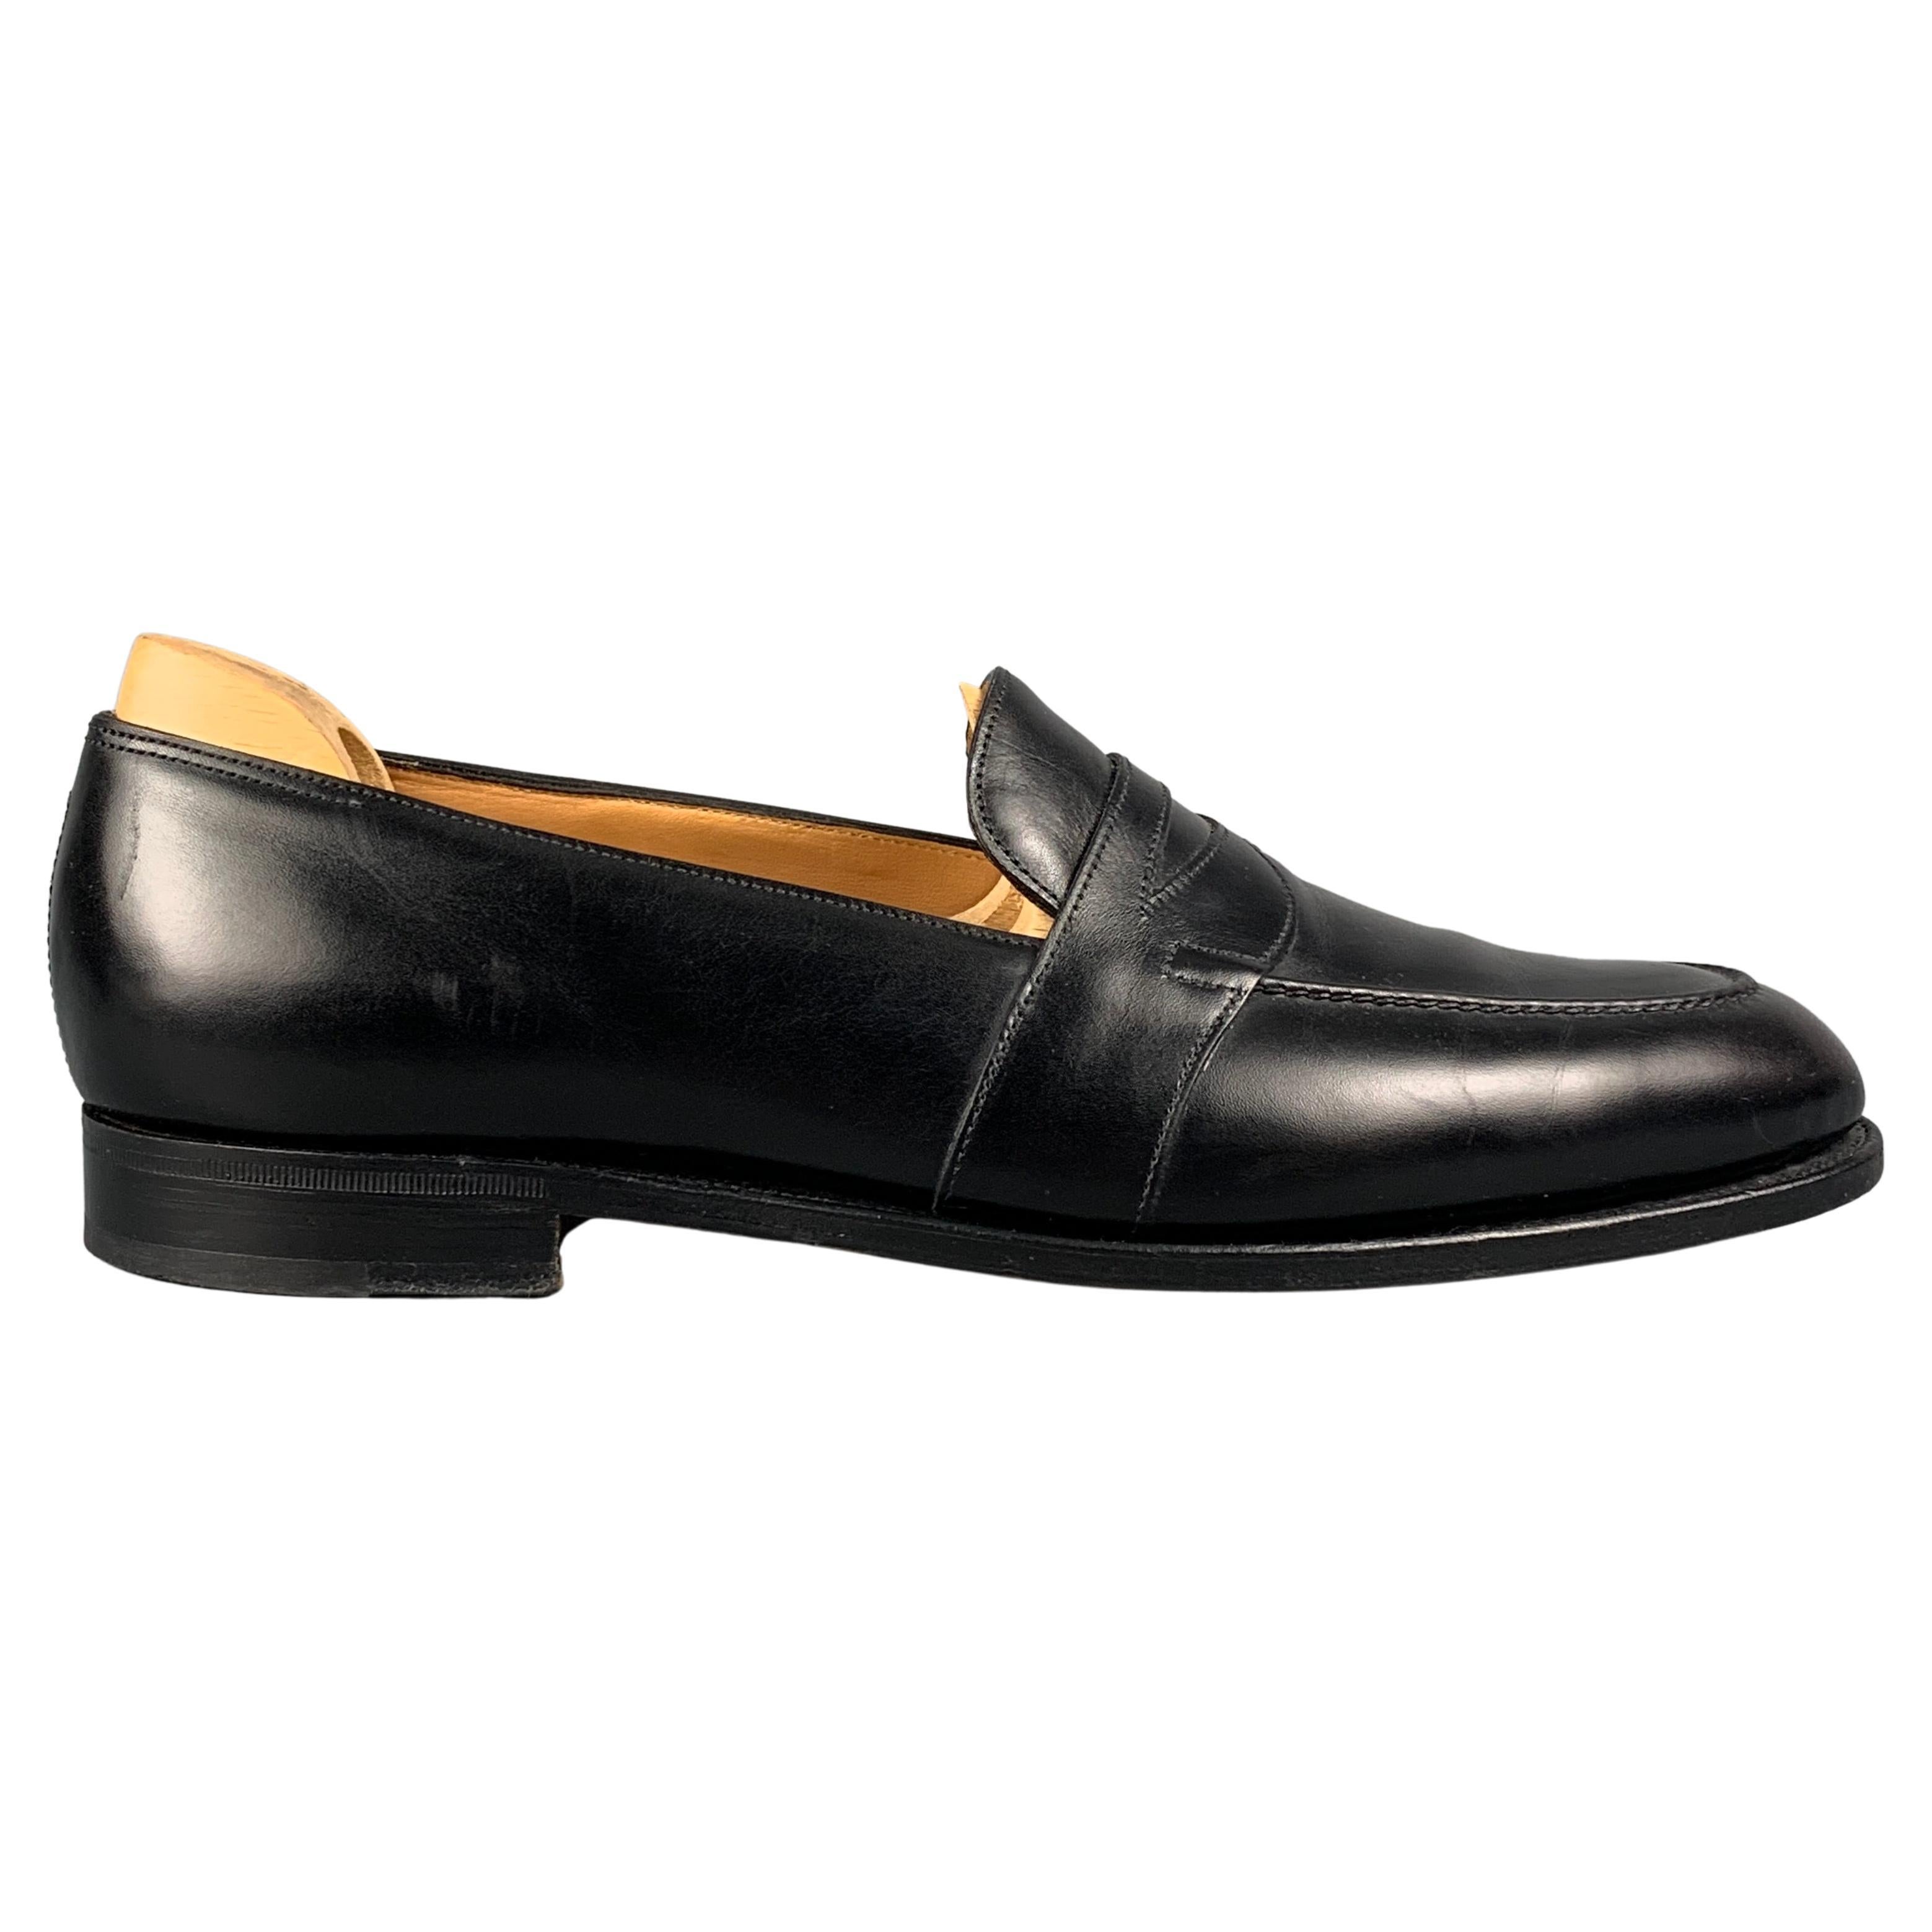 JOHN LOBB Size 9.5 Black Leather Penny Loafers